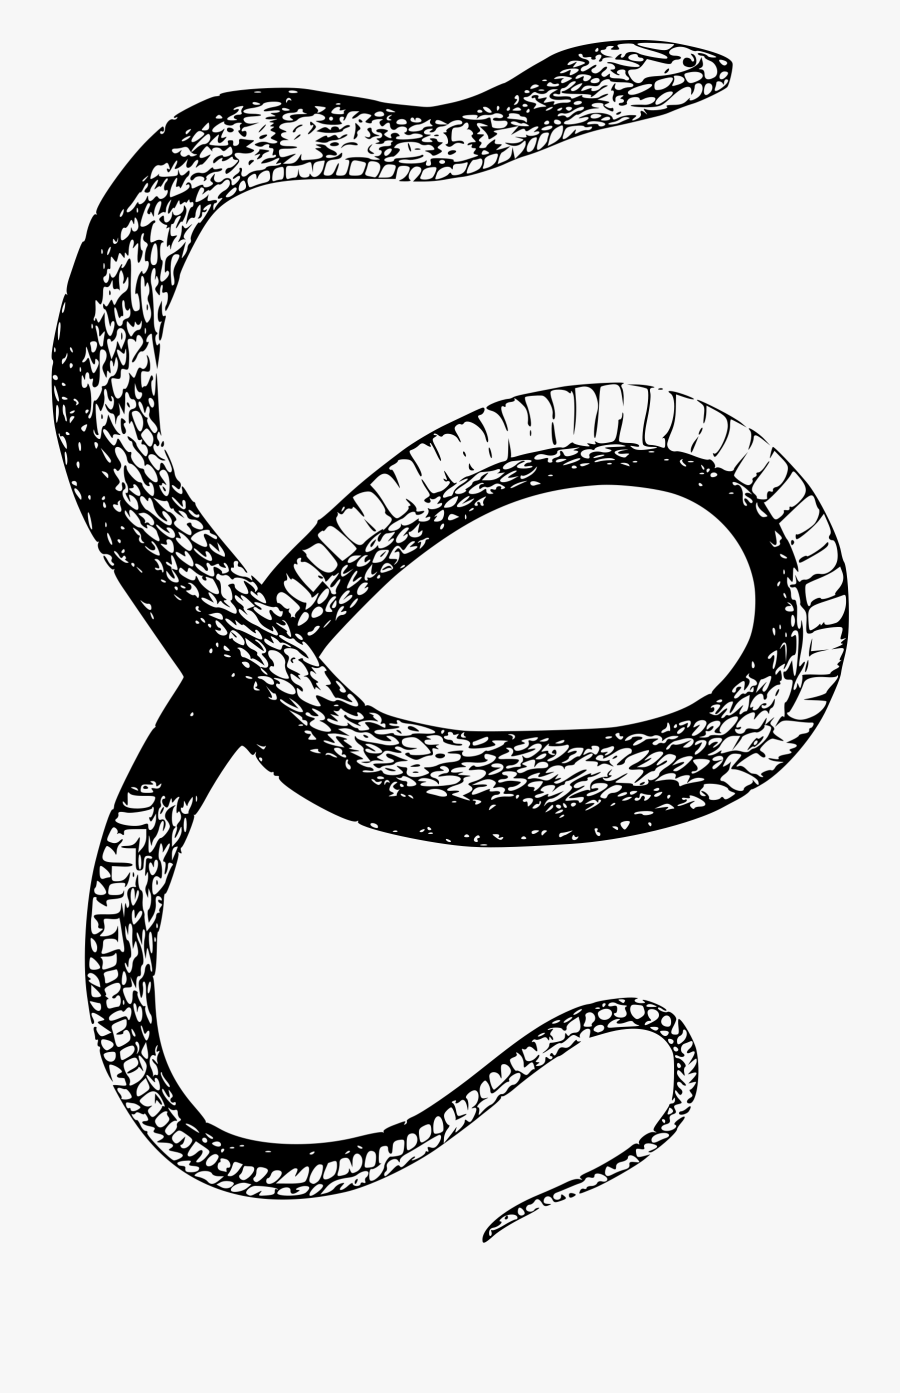 Clipart - Snake Drawing Transparent Background, Transparent Clipart